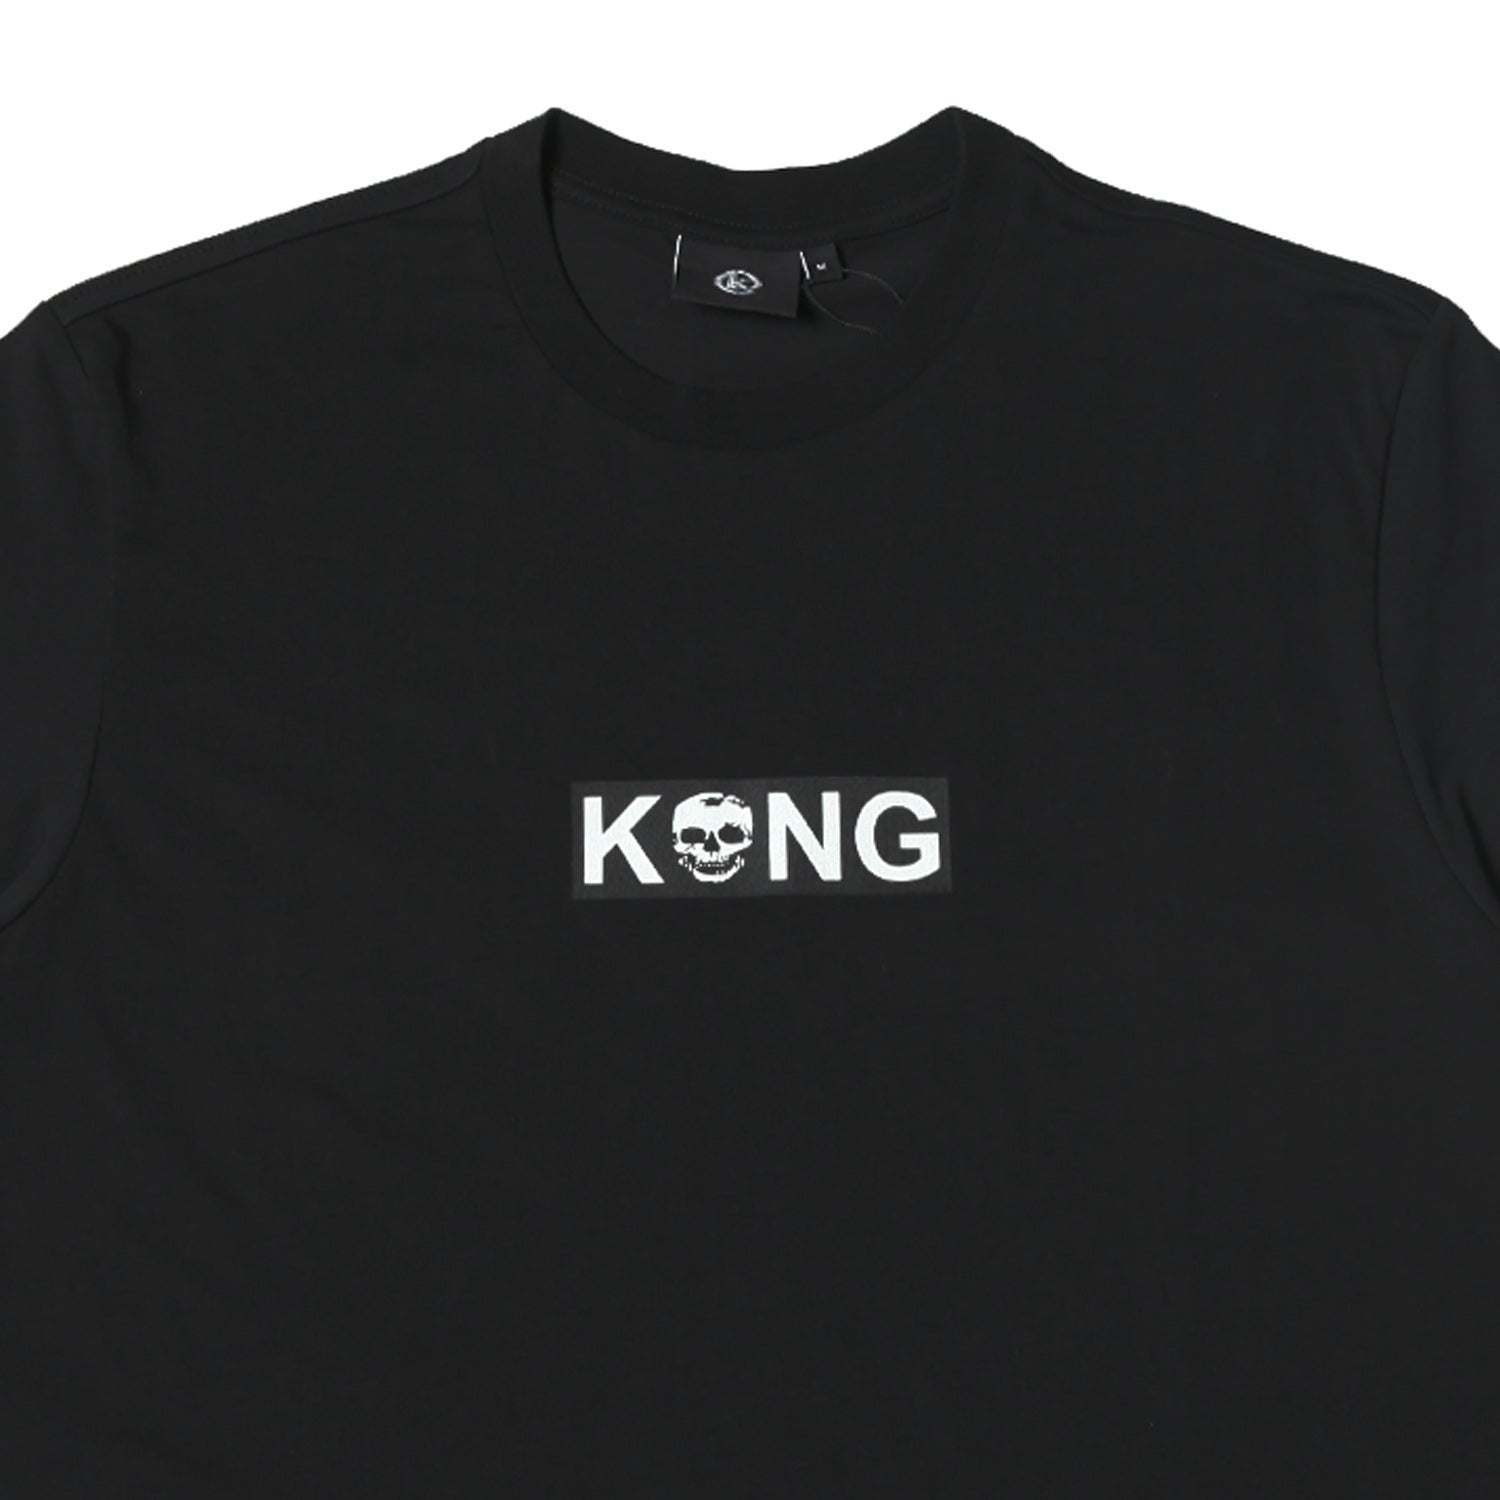 Kong Box Logo Tee Black